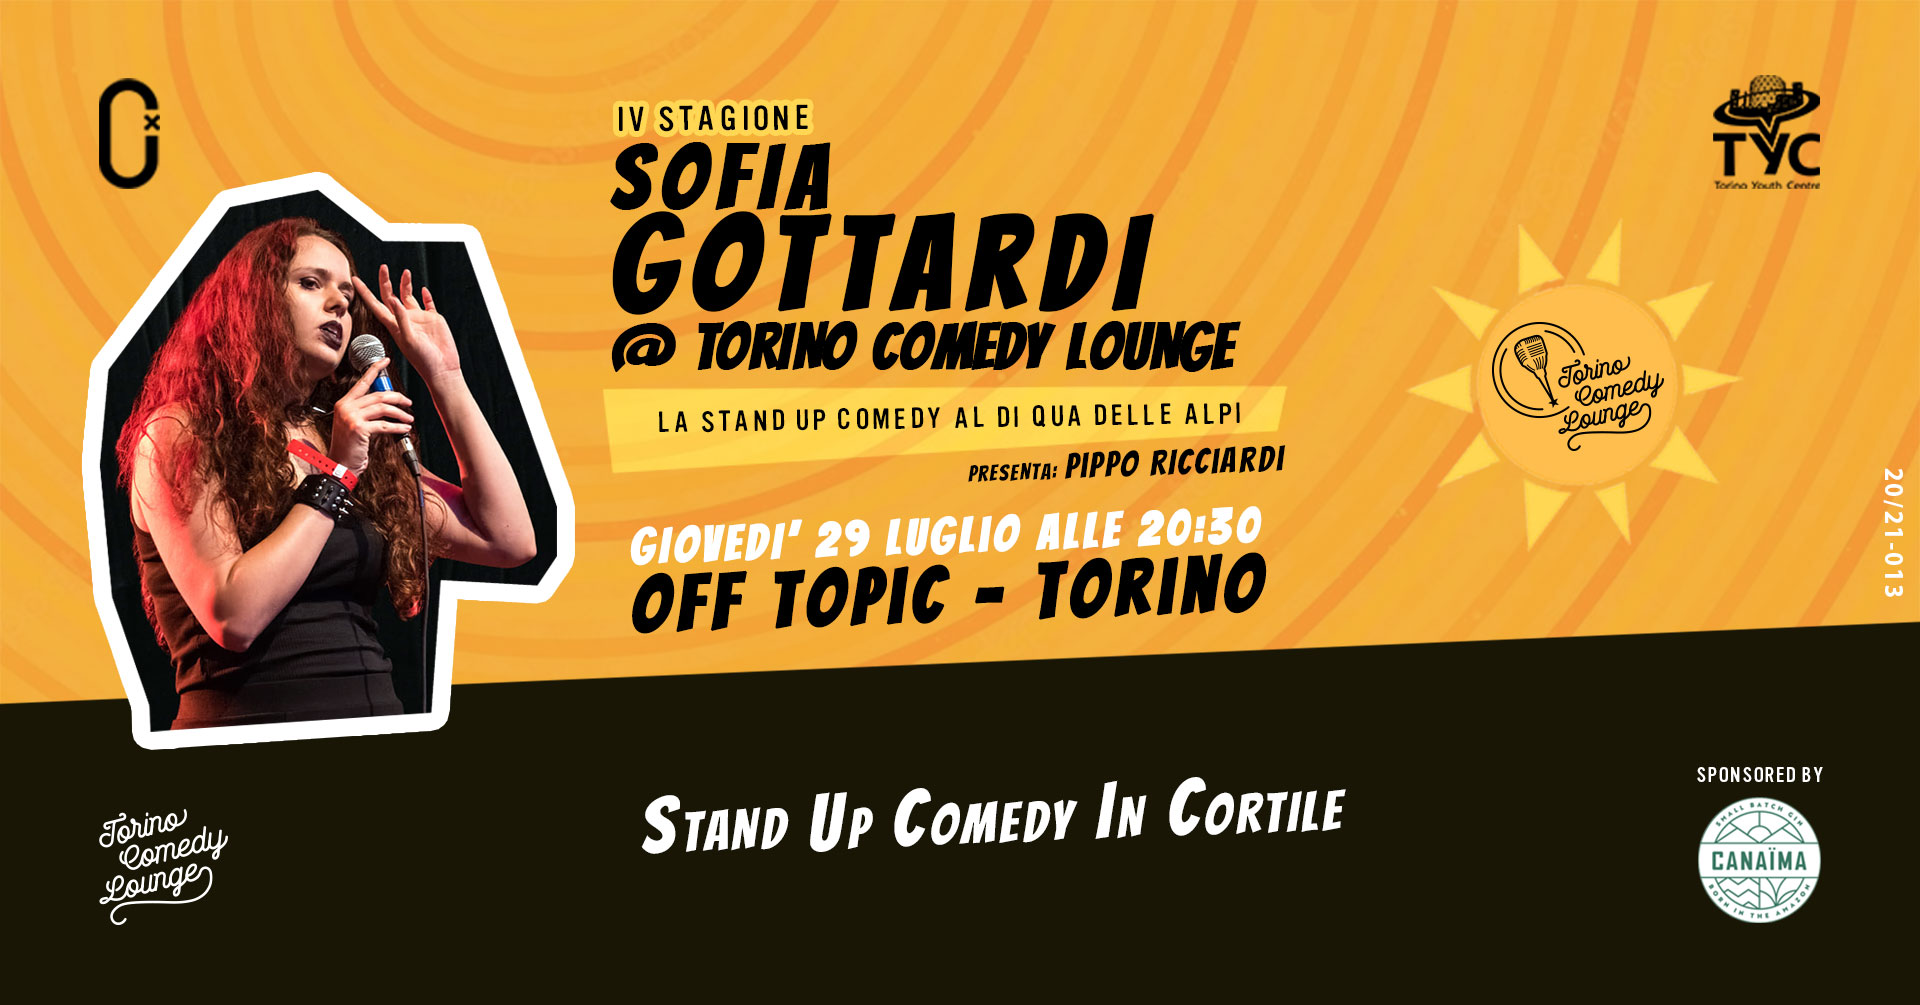 Sofia Gottardi @ Torino Comedy Lounge